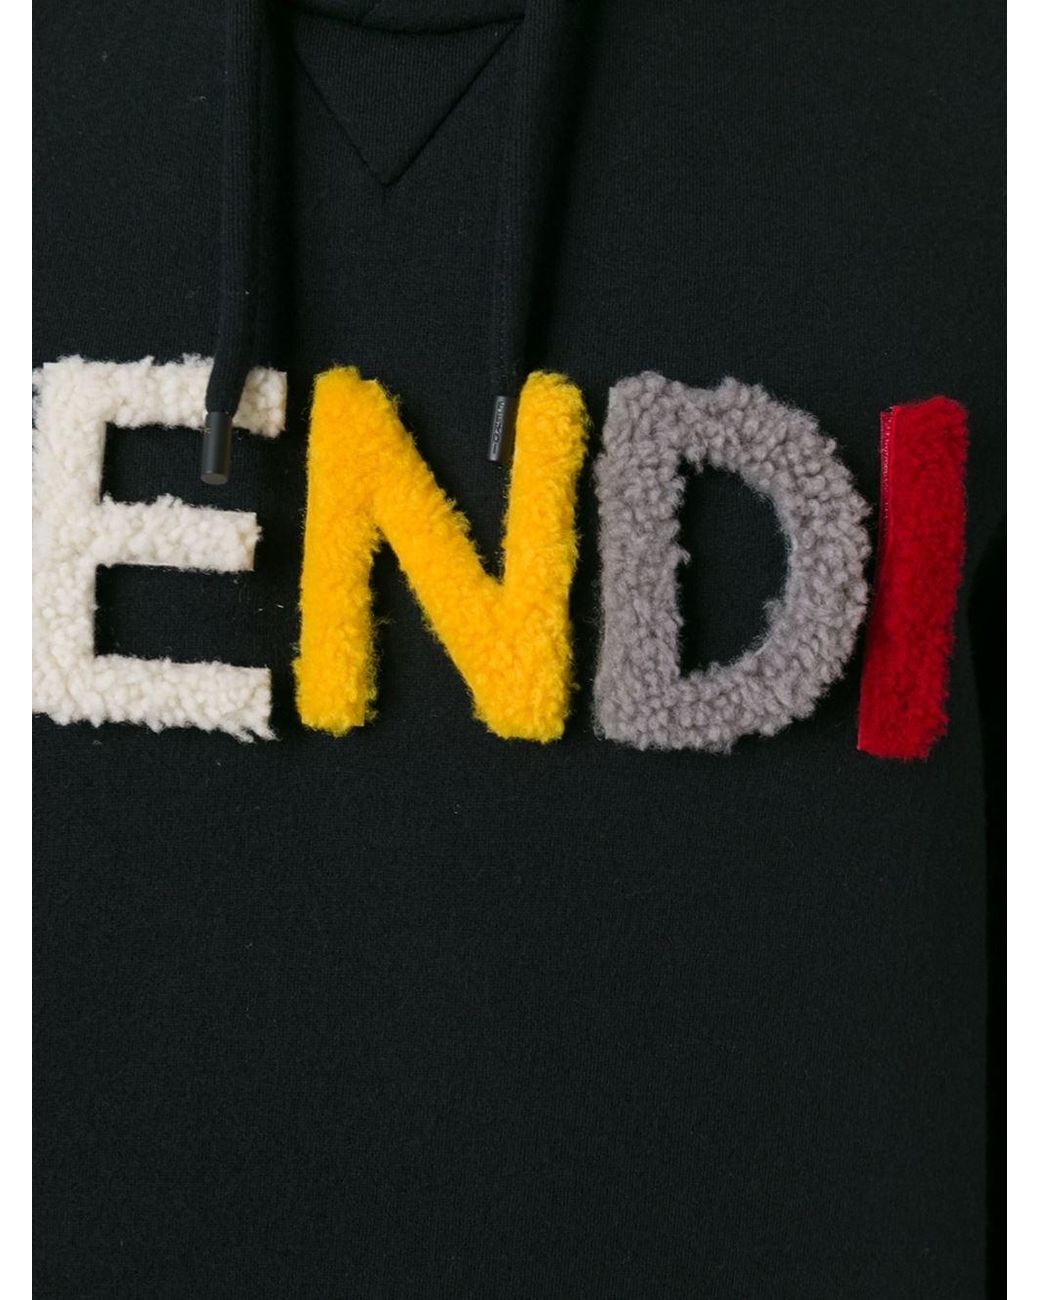 Fendi Black Hoodie With Logo for Men | Lyst